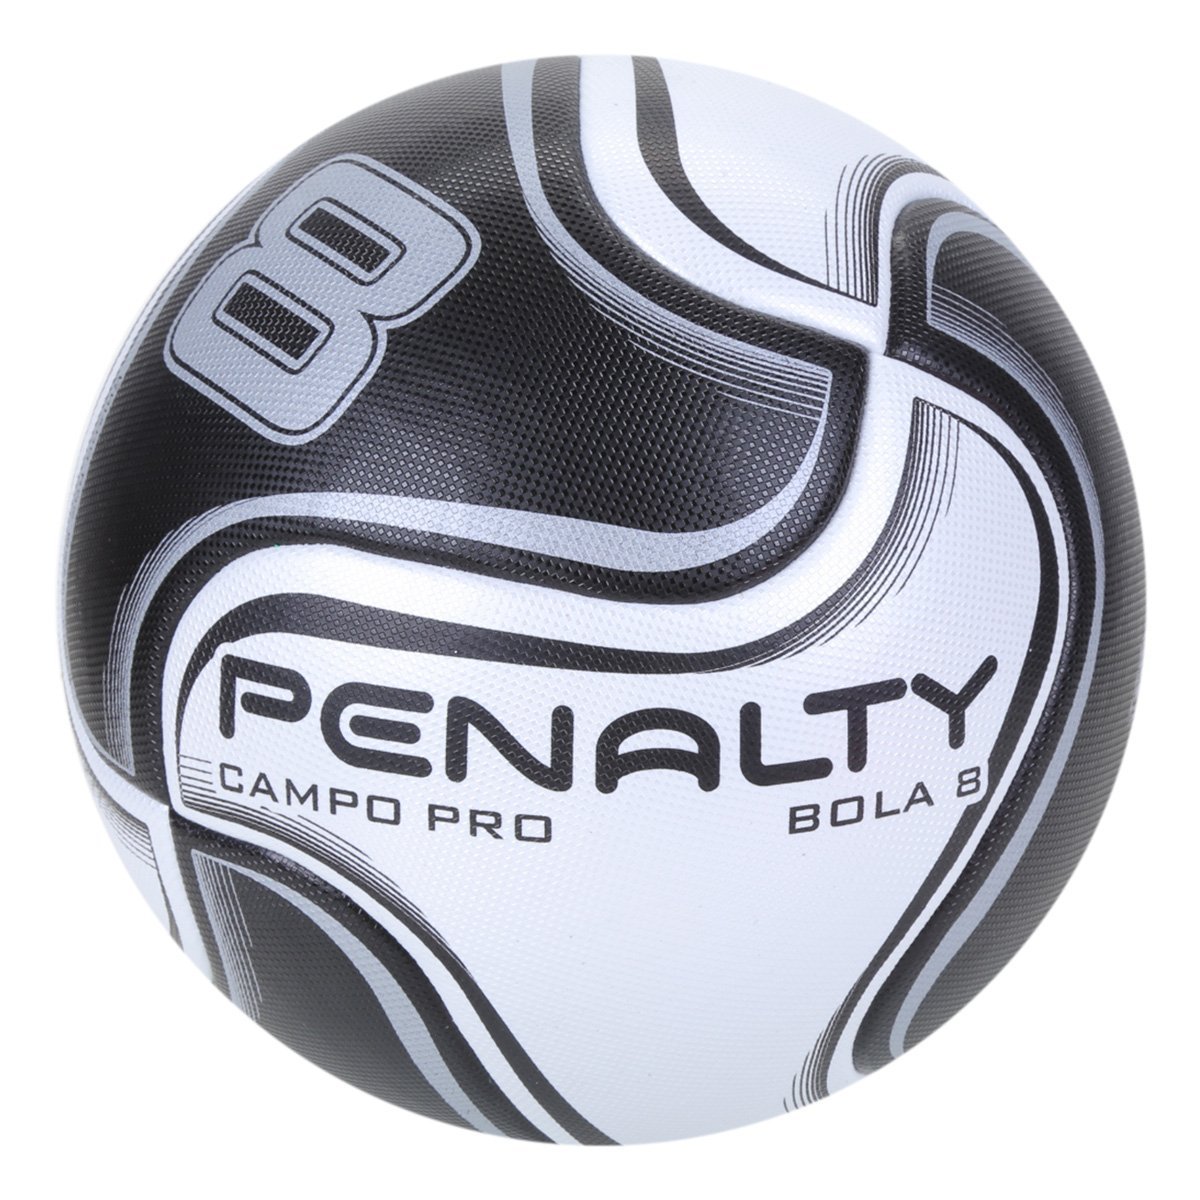 Bola de Futebol Campo Penalty 8 Pro XXI;Cor:Branco +Preto;Tamanho: Único;Gênero: Unissex - 2